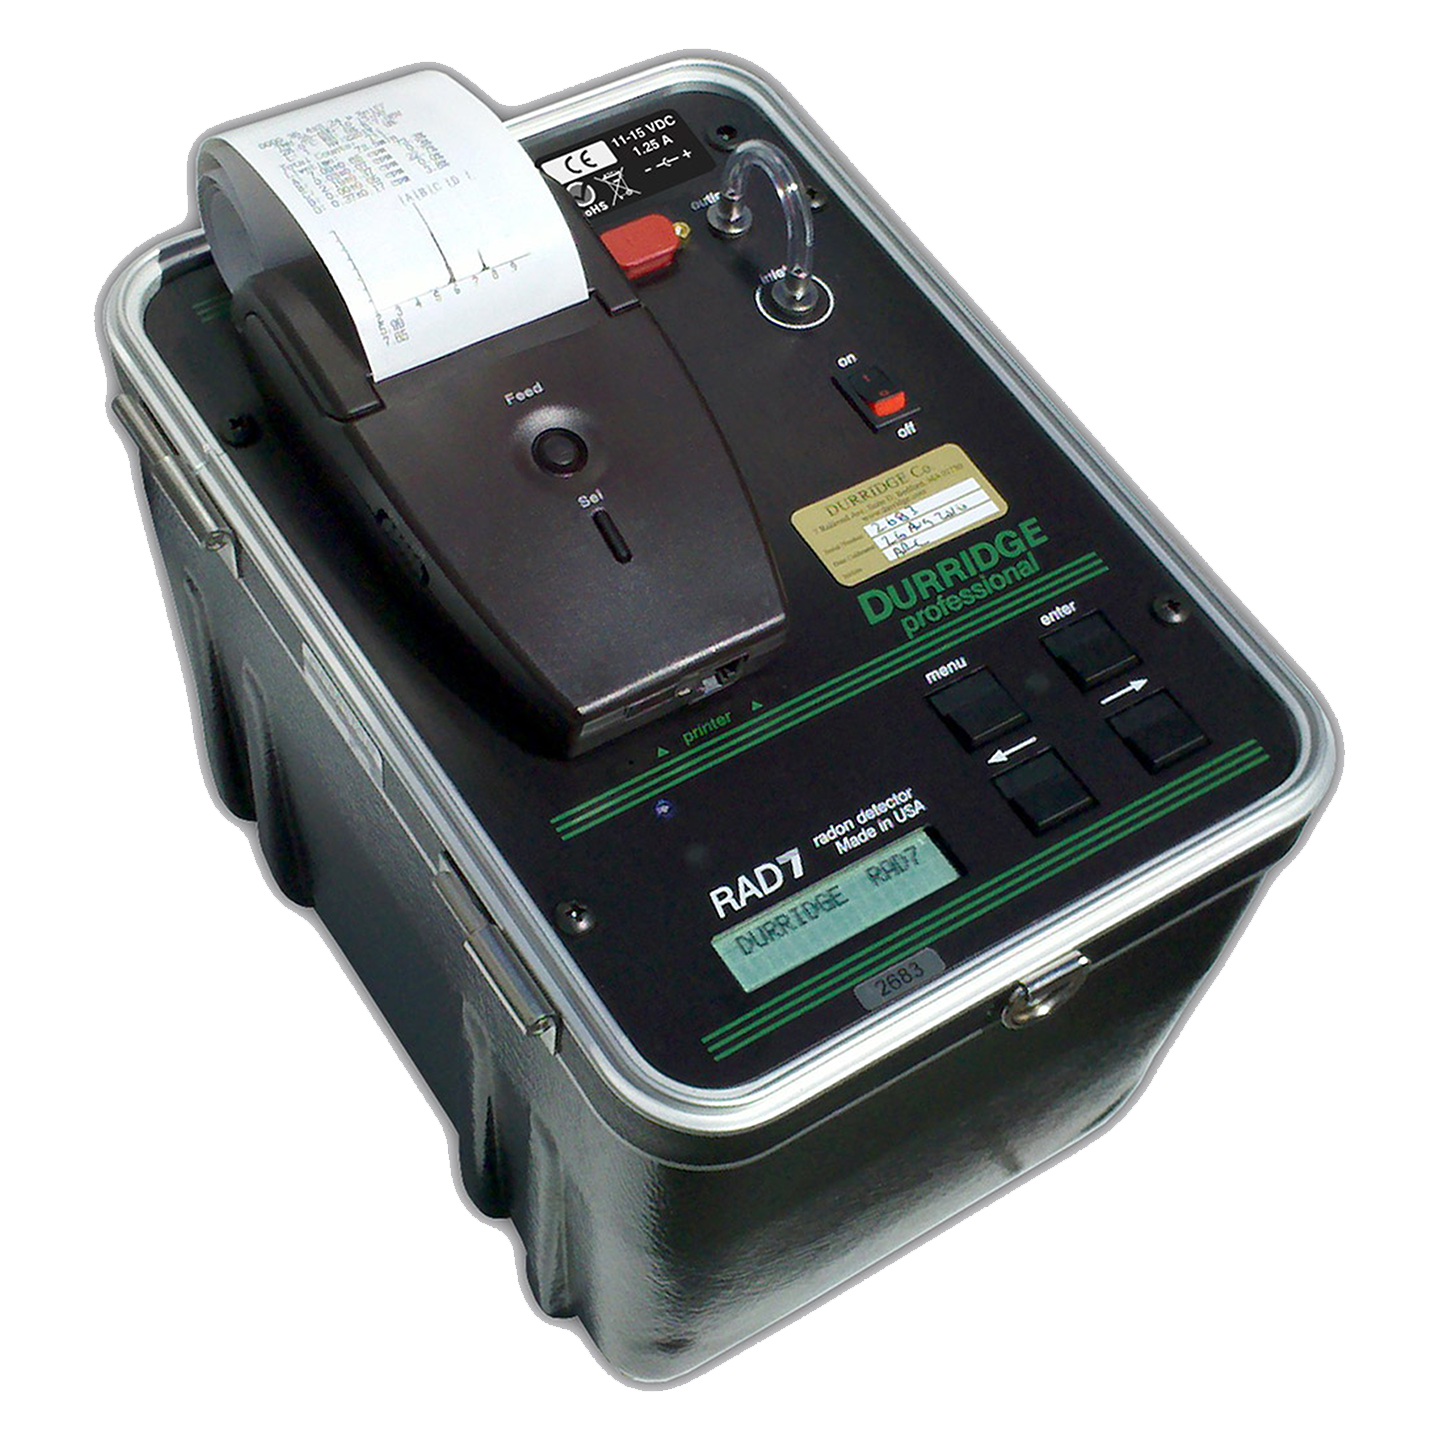 Model 1030® Continuous Radon Monitor I SunRADON